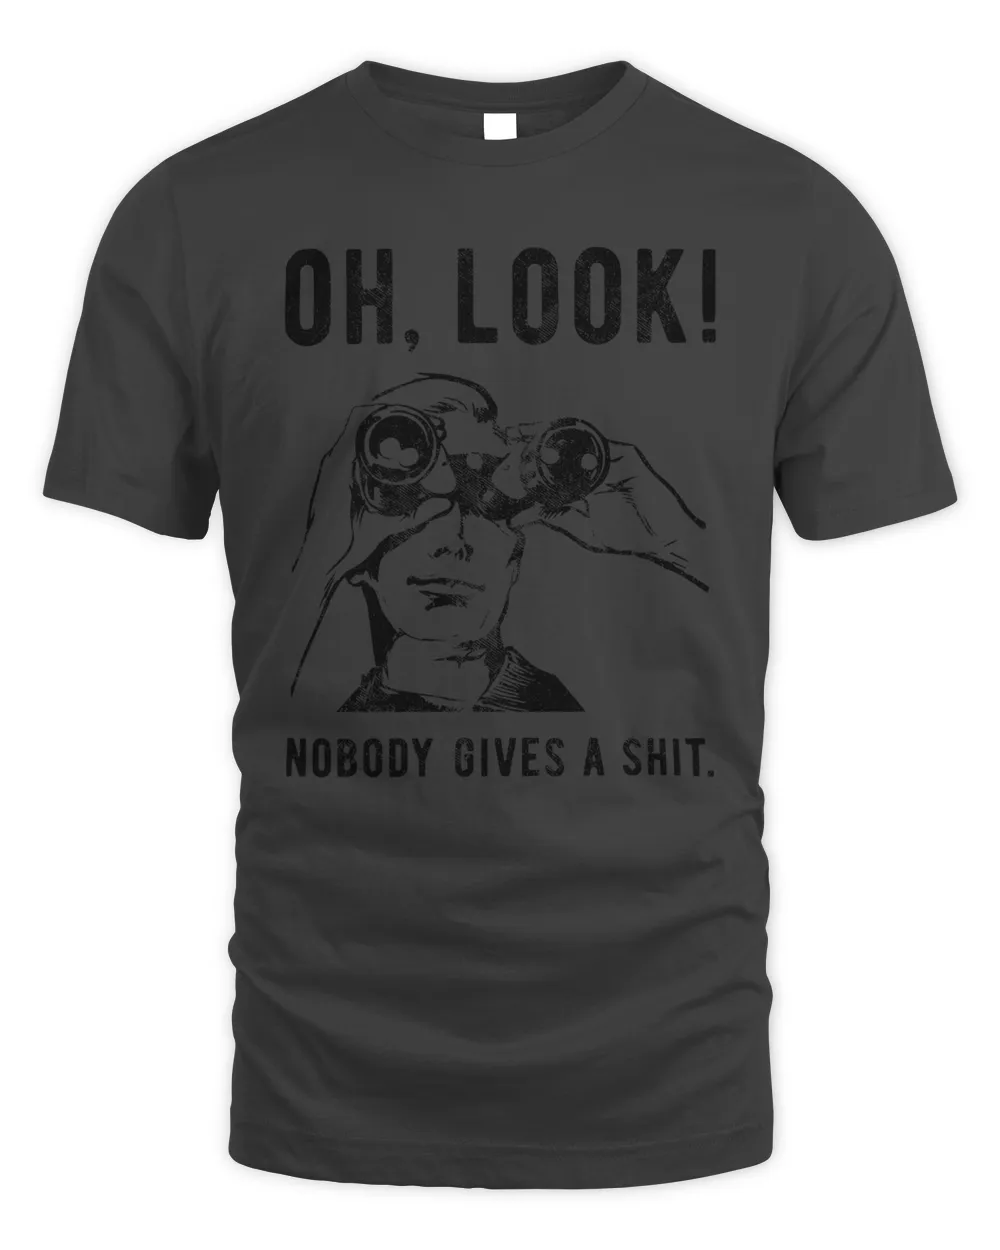 Funny Mens Shirt, Sarcastic Shirt For Men, Novelty Shirts, Funny Saying Shirts, Offensive Shirt, Oh Look Nobody Gives A Shit